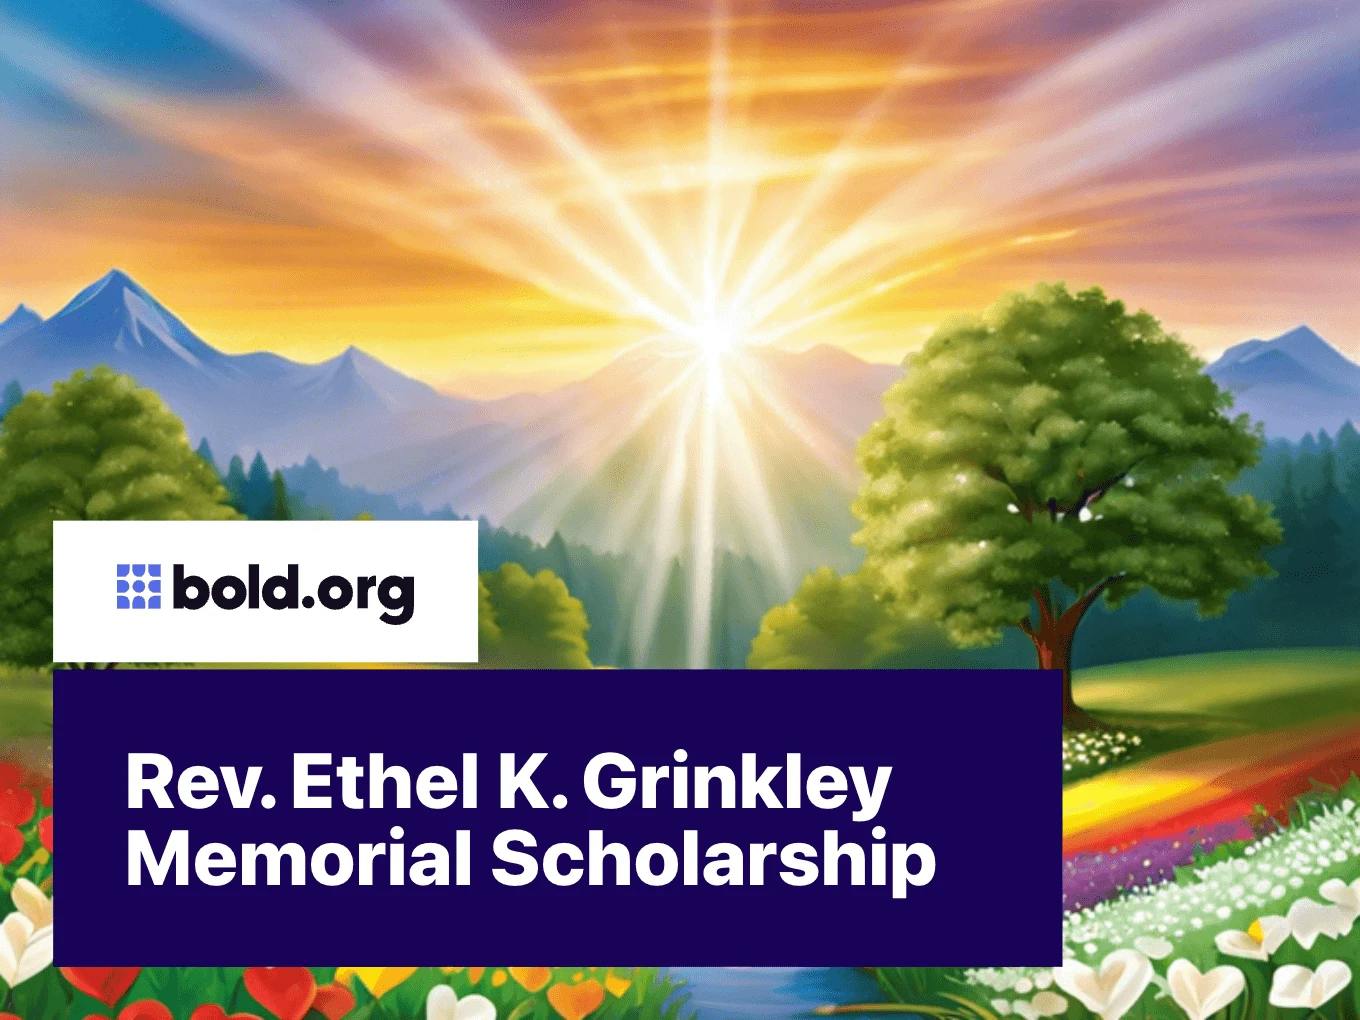 Rev. Ethel K. Grinkley Memorial Scholarship